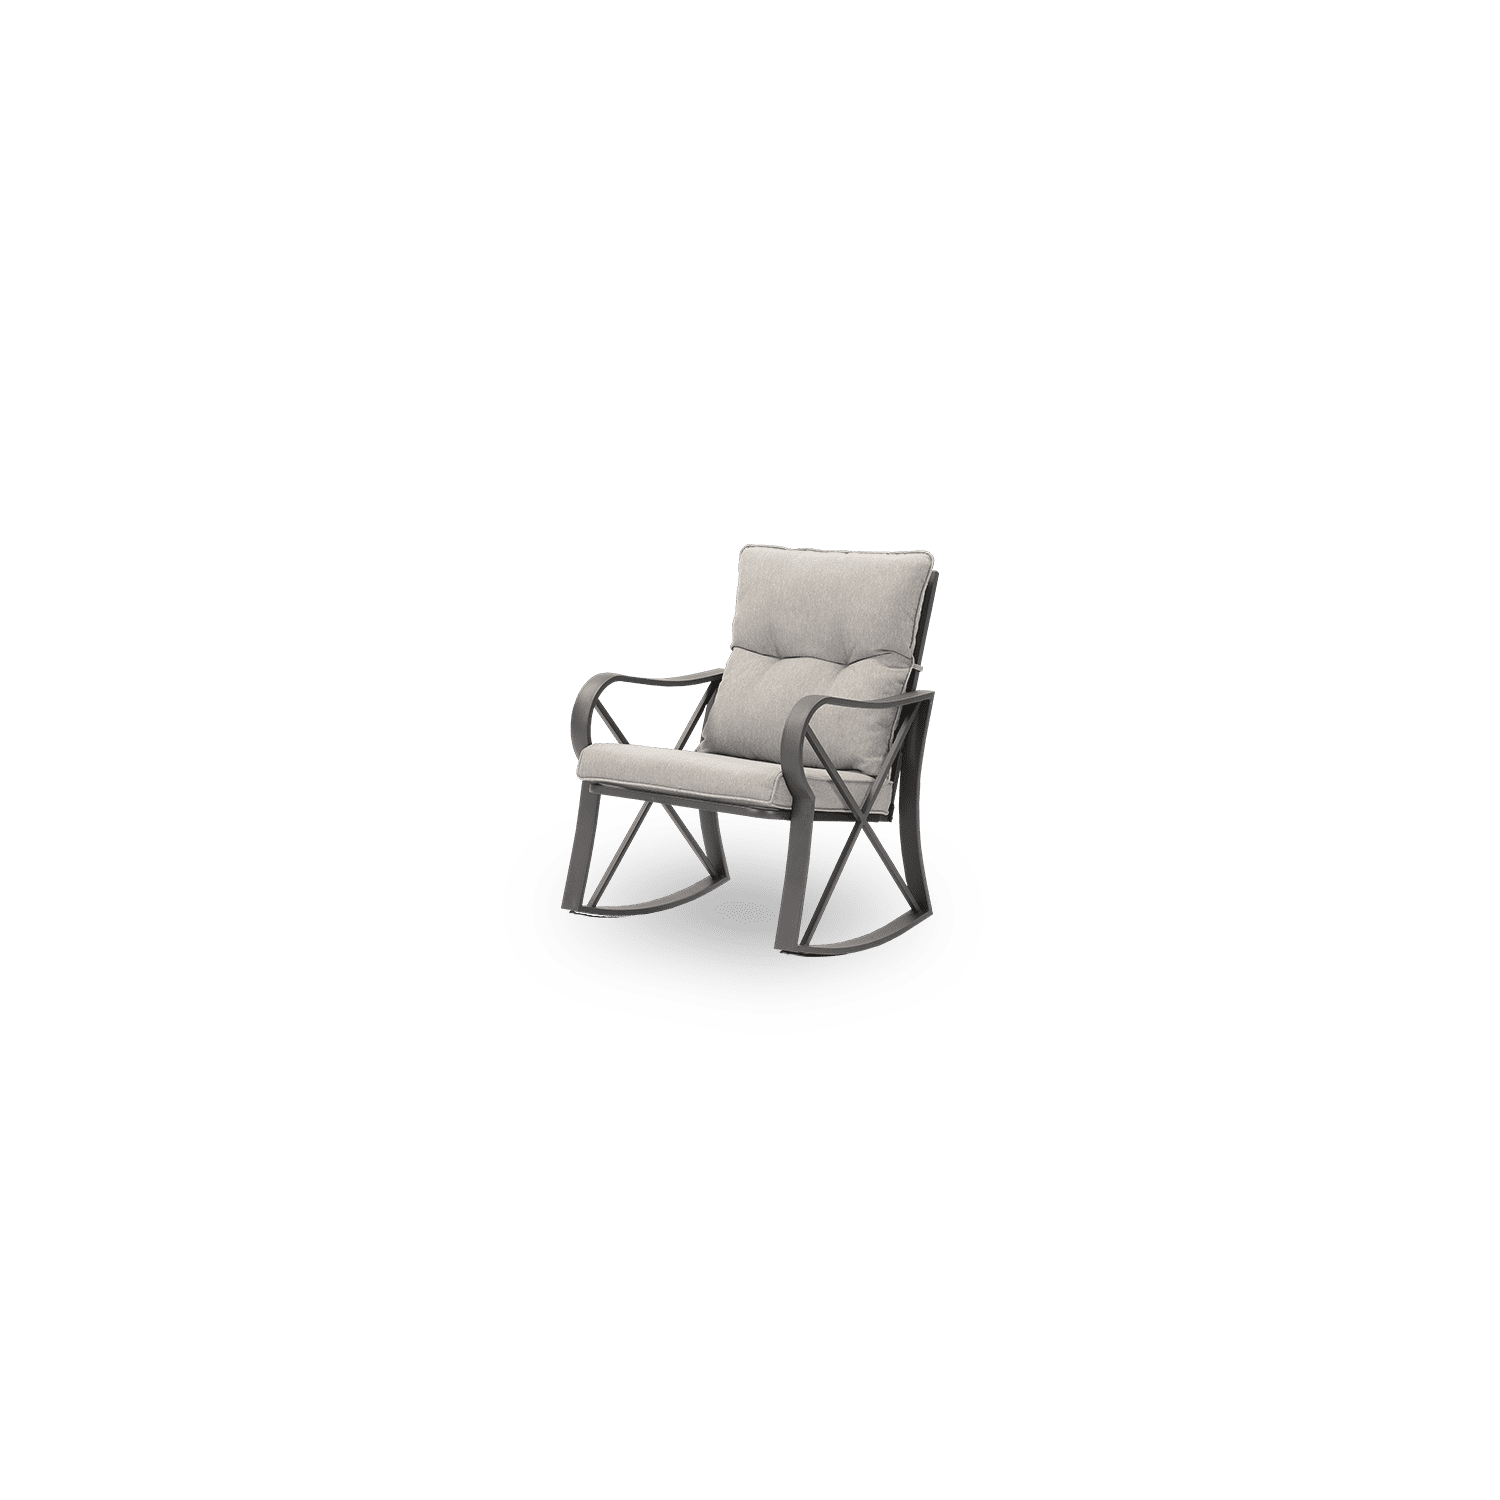 Niihau Grey Front Porch Rocking Chair Set